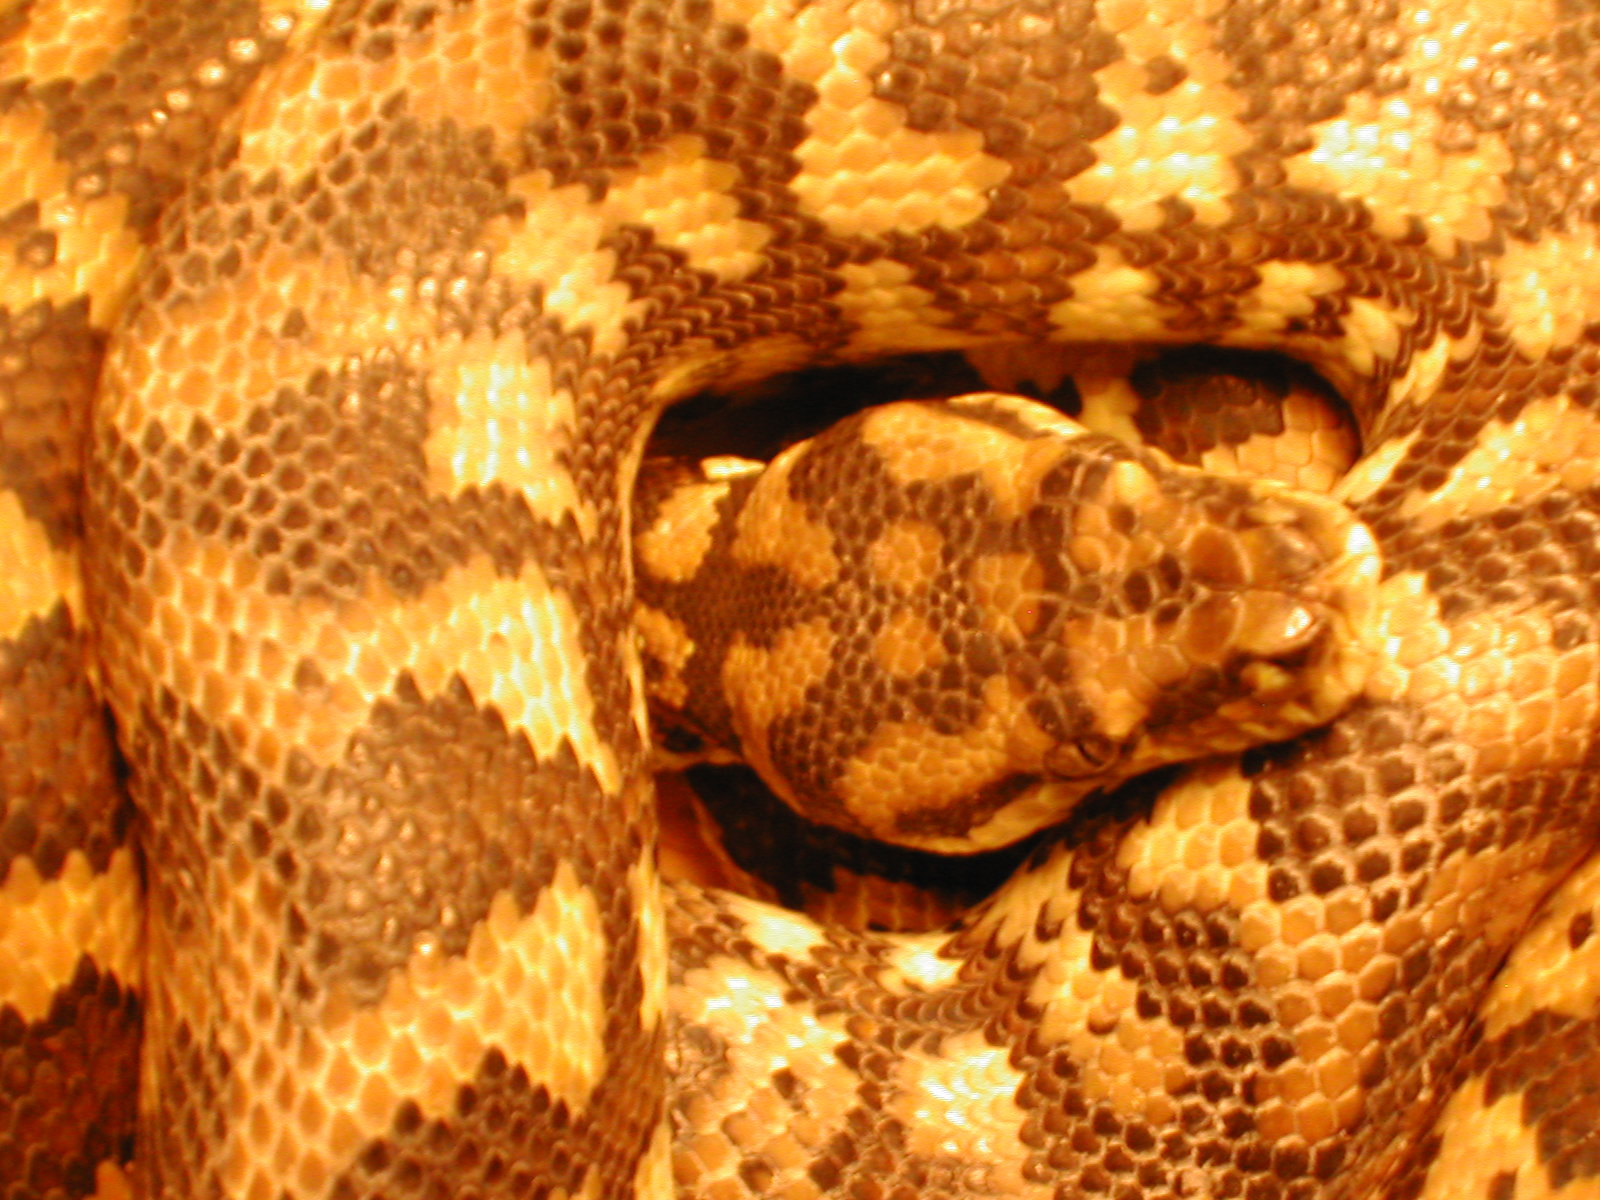 Carpet Python: Liasis mackloti